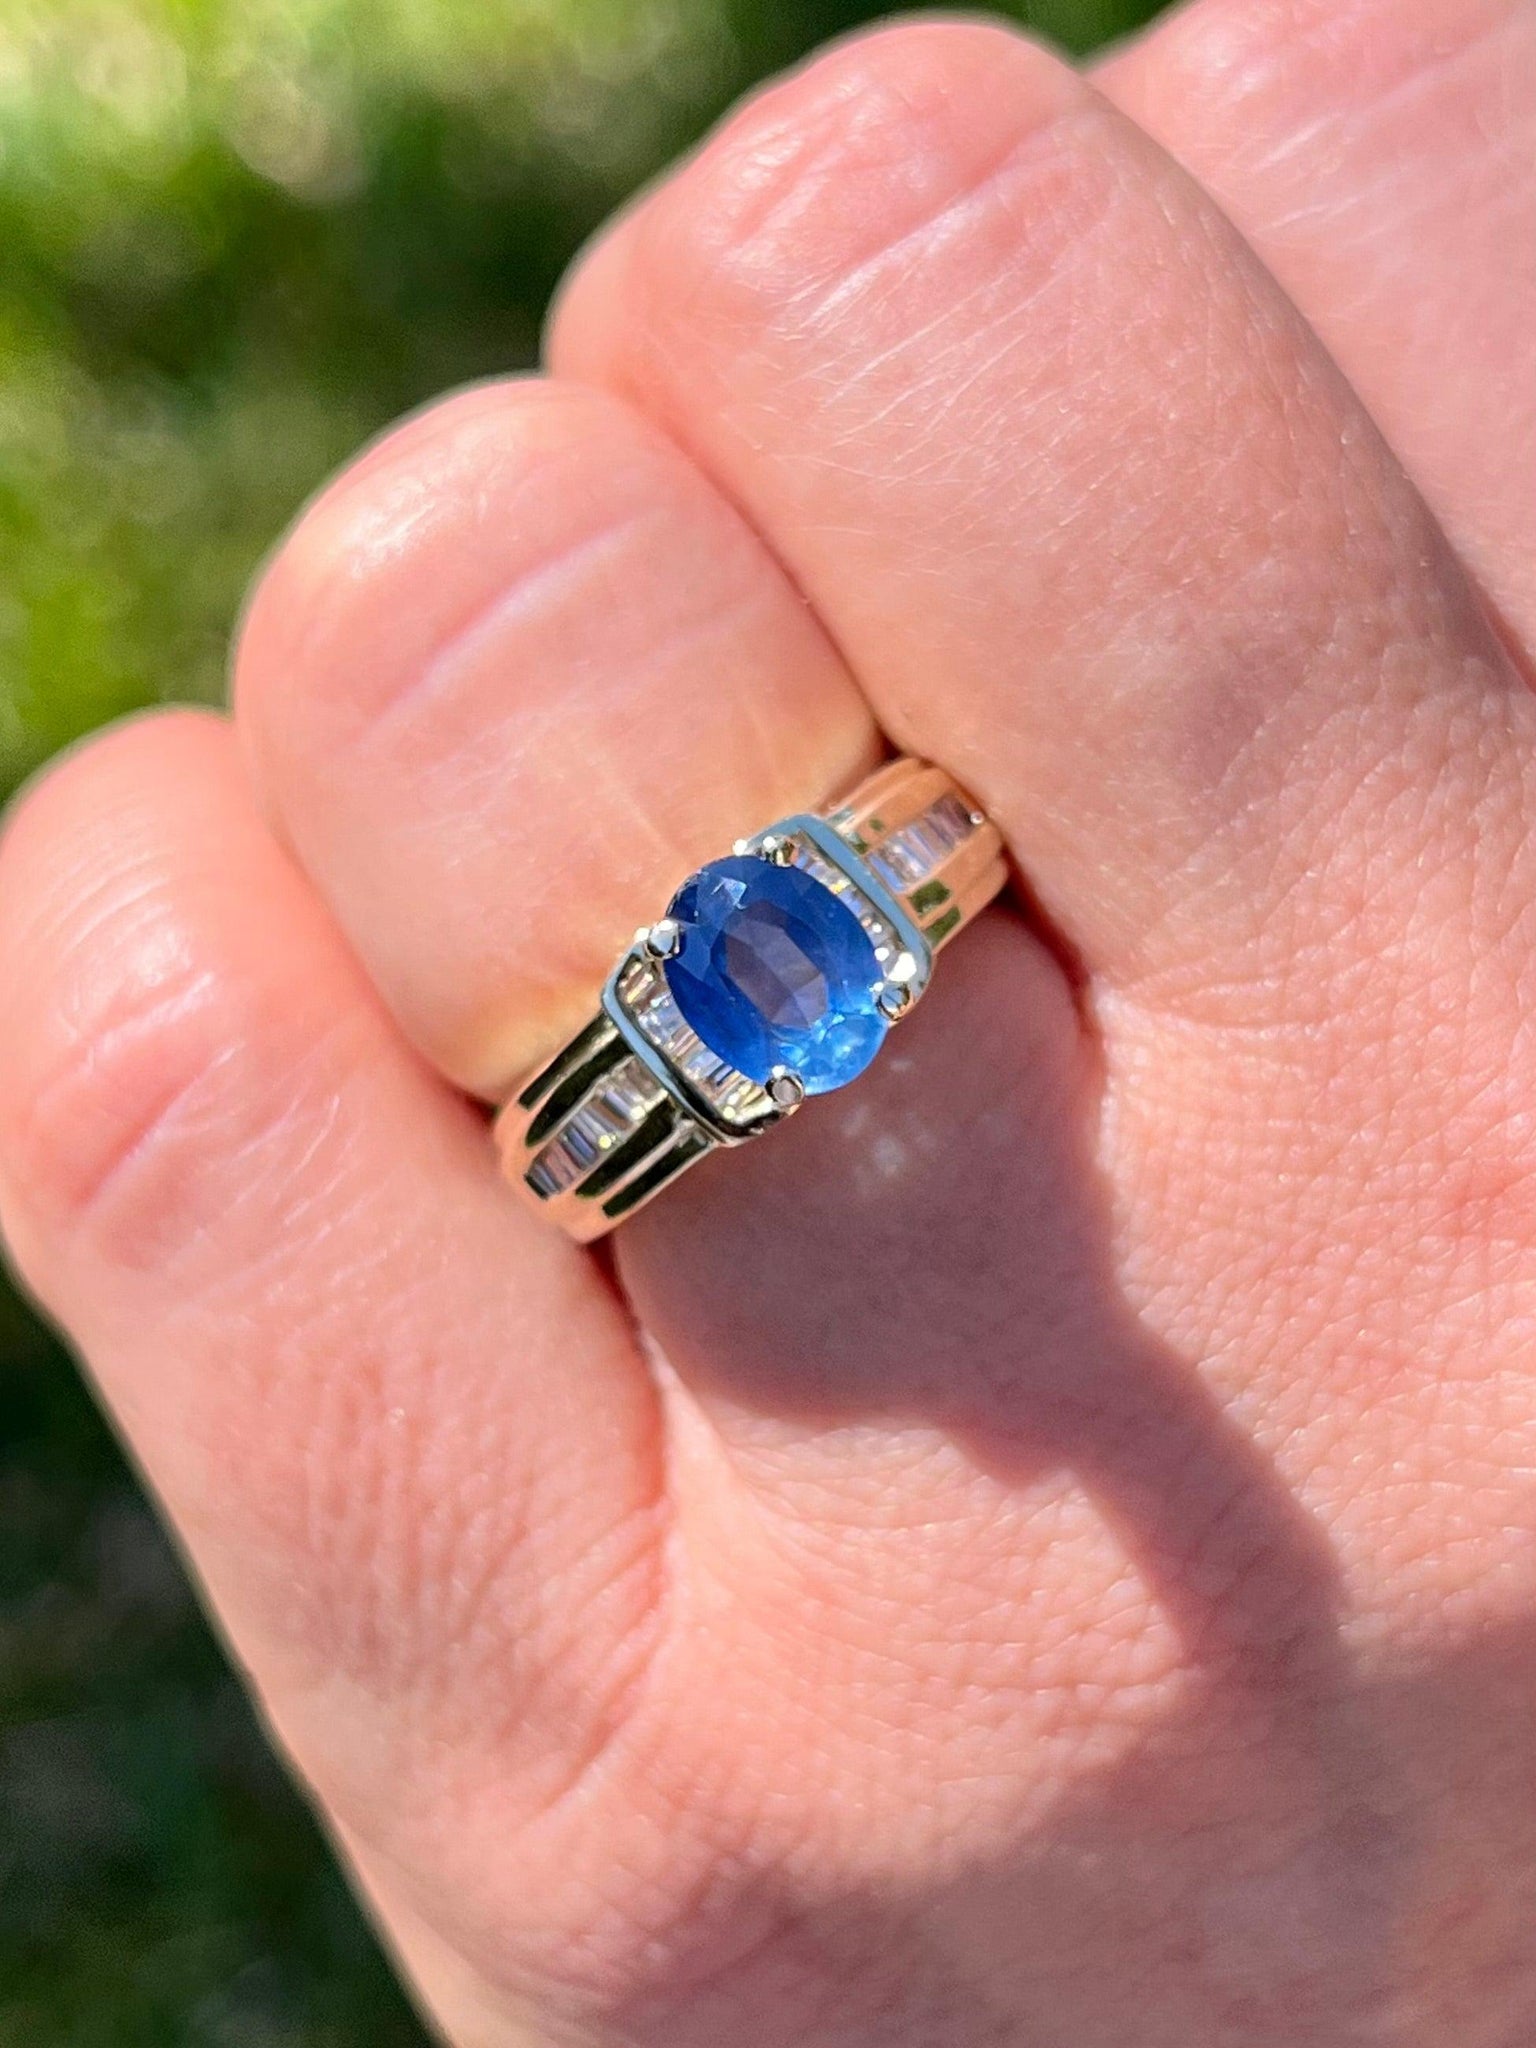 1.22 Carat Oval Cut Blue Sapphire with Baguette Cut Diamonds in 14k Gold Ring-ASSAY-ASSAY